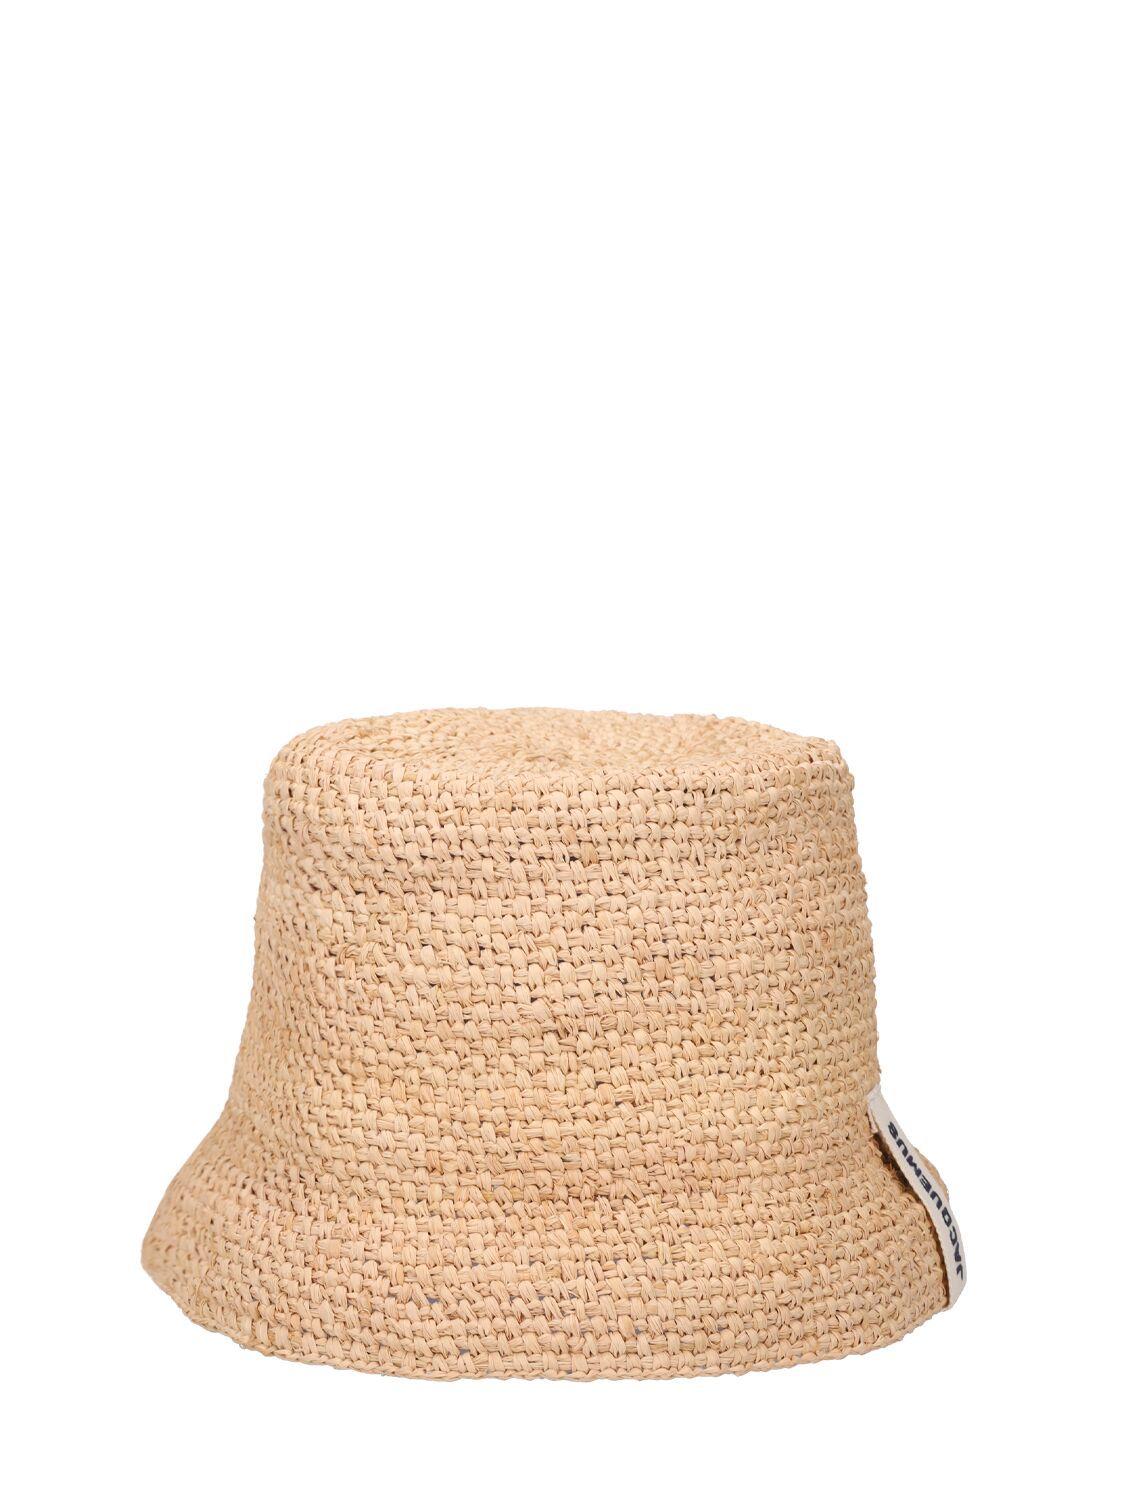 Jacquemus Le Bob Raphia Bucket Hat in Natural | Lyst